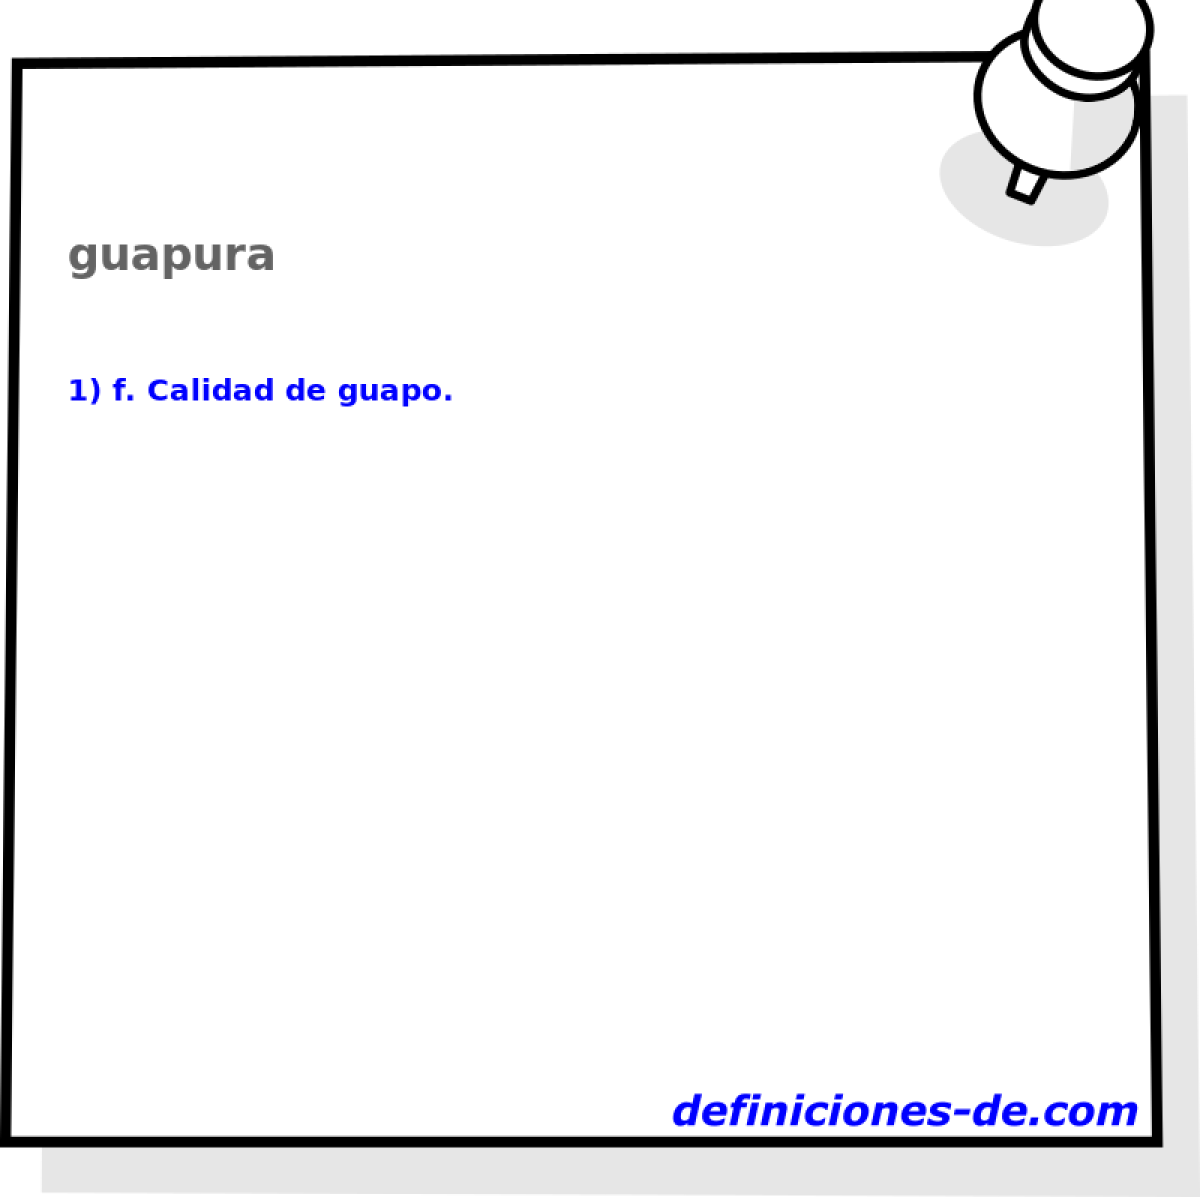 guapura 